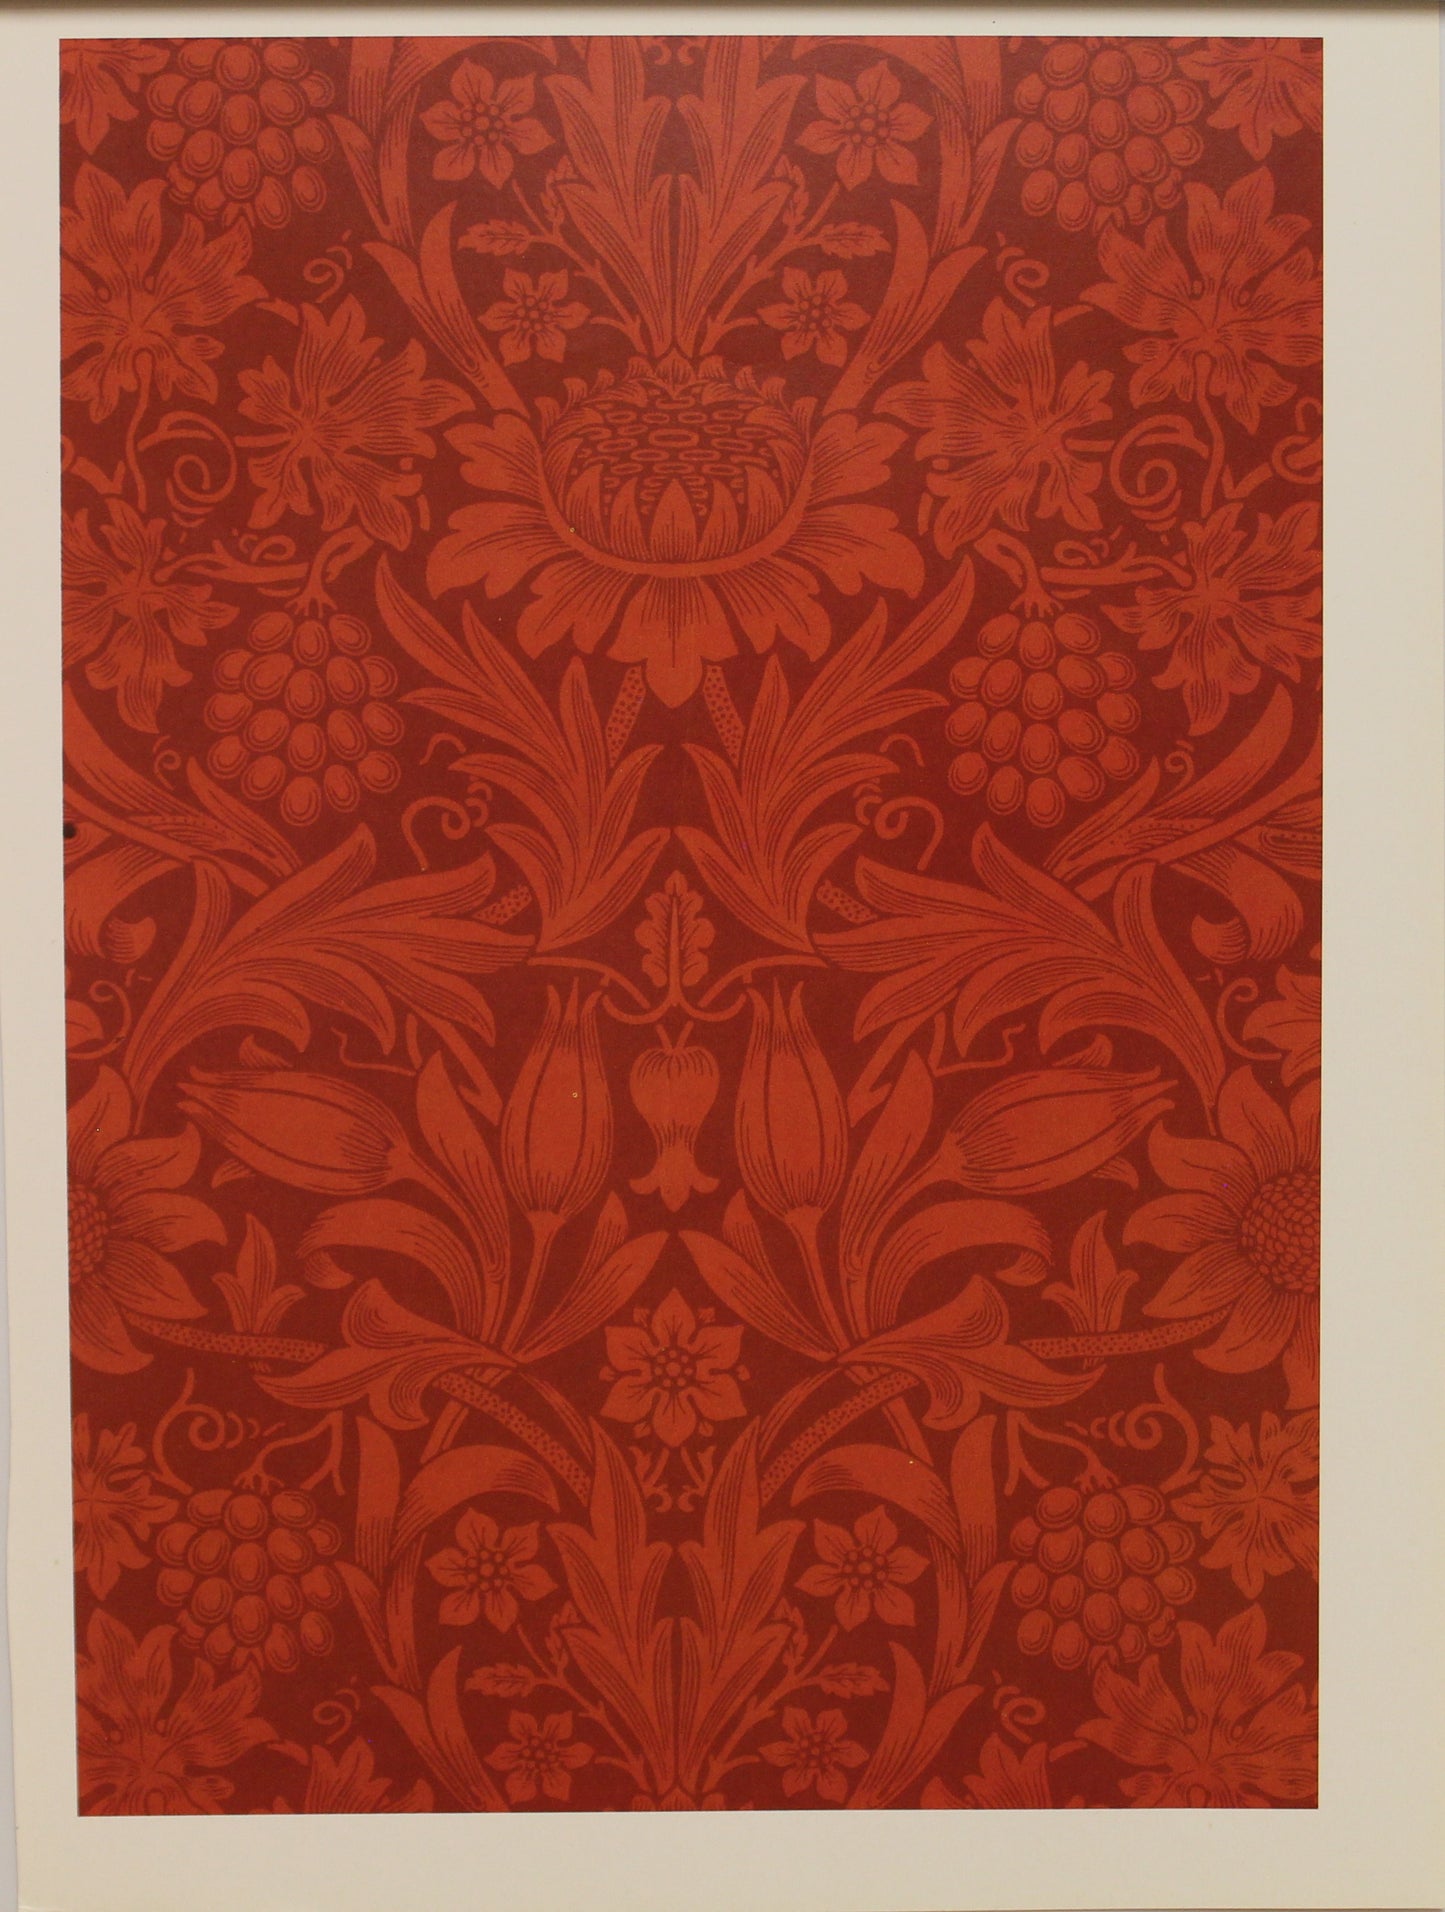 Decorator, Morris William, Walpaper Design, Sunflower, Plate 16 Art Nouveau, c1879